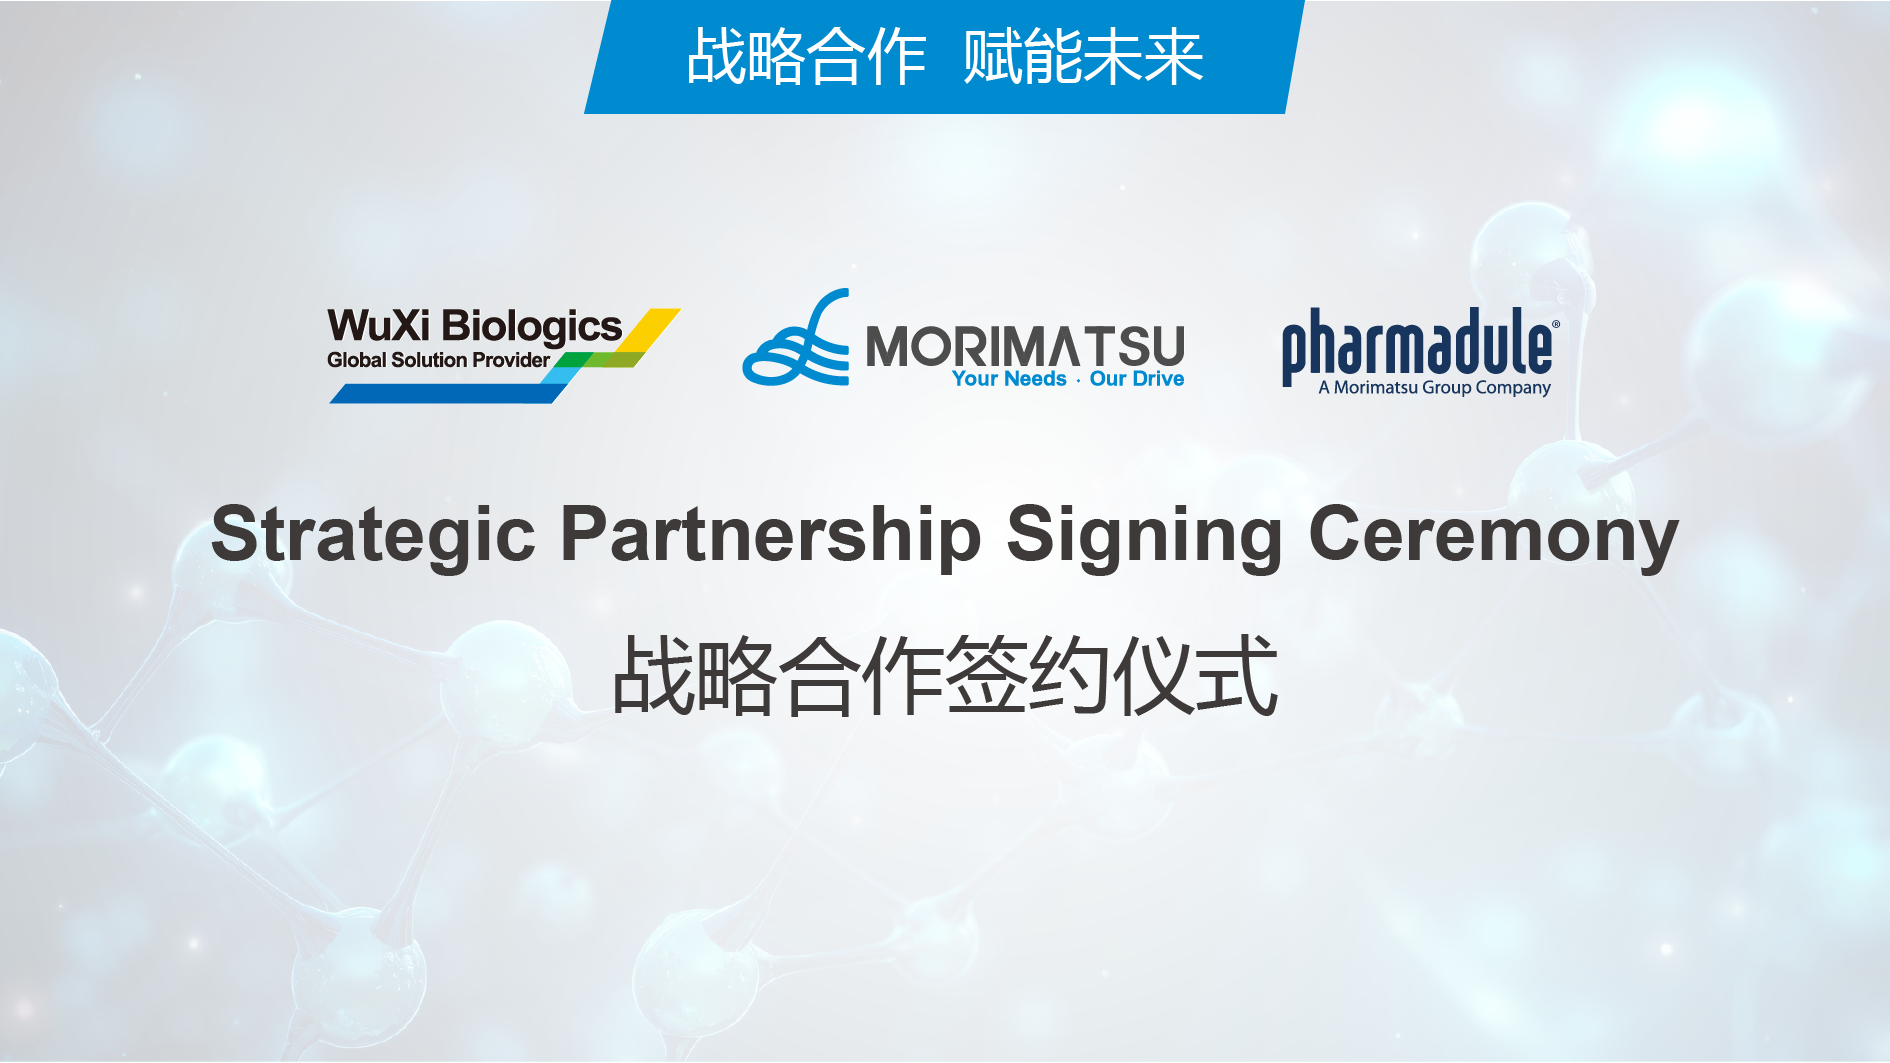 Pharmadule Morimatsu and WuXi Biologics Reached Global Strategic Partnership